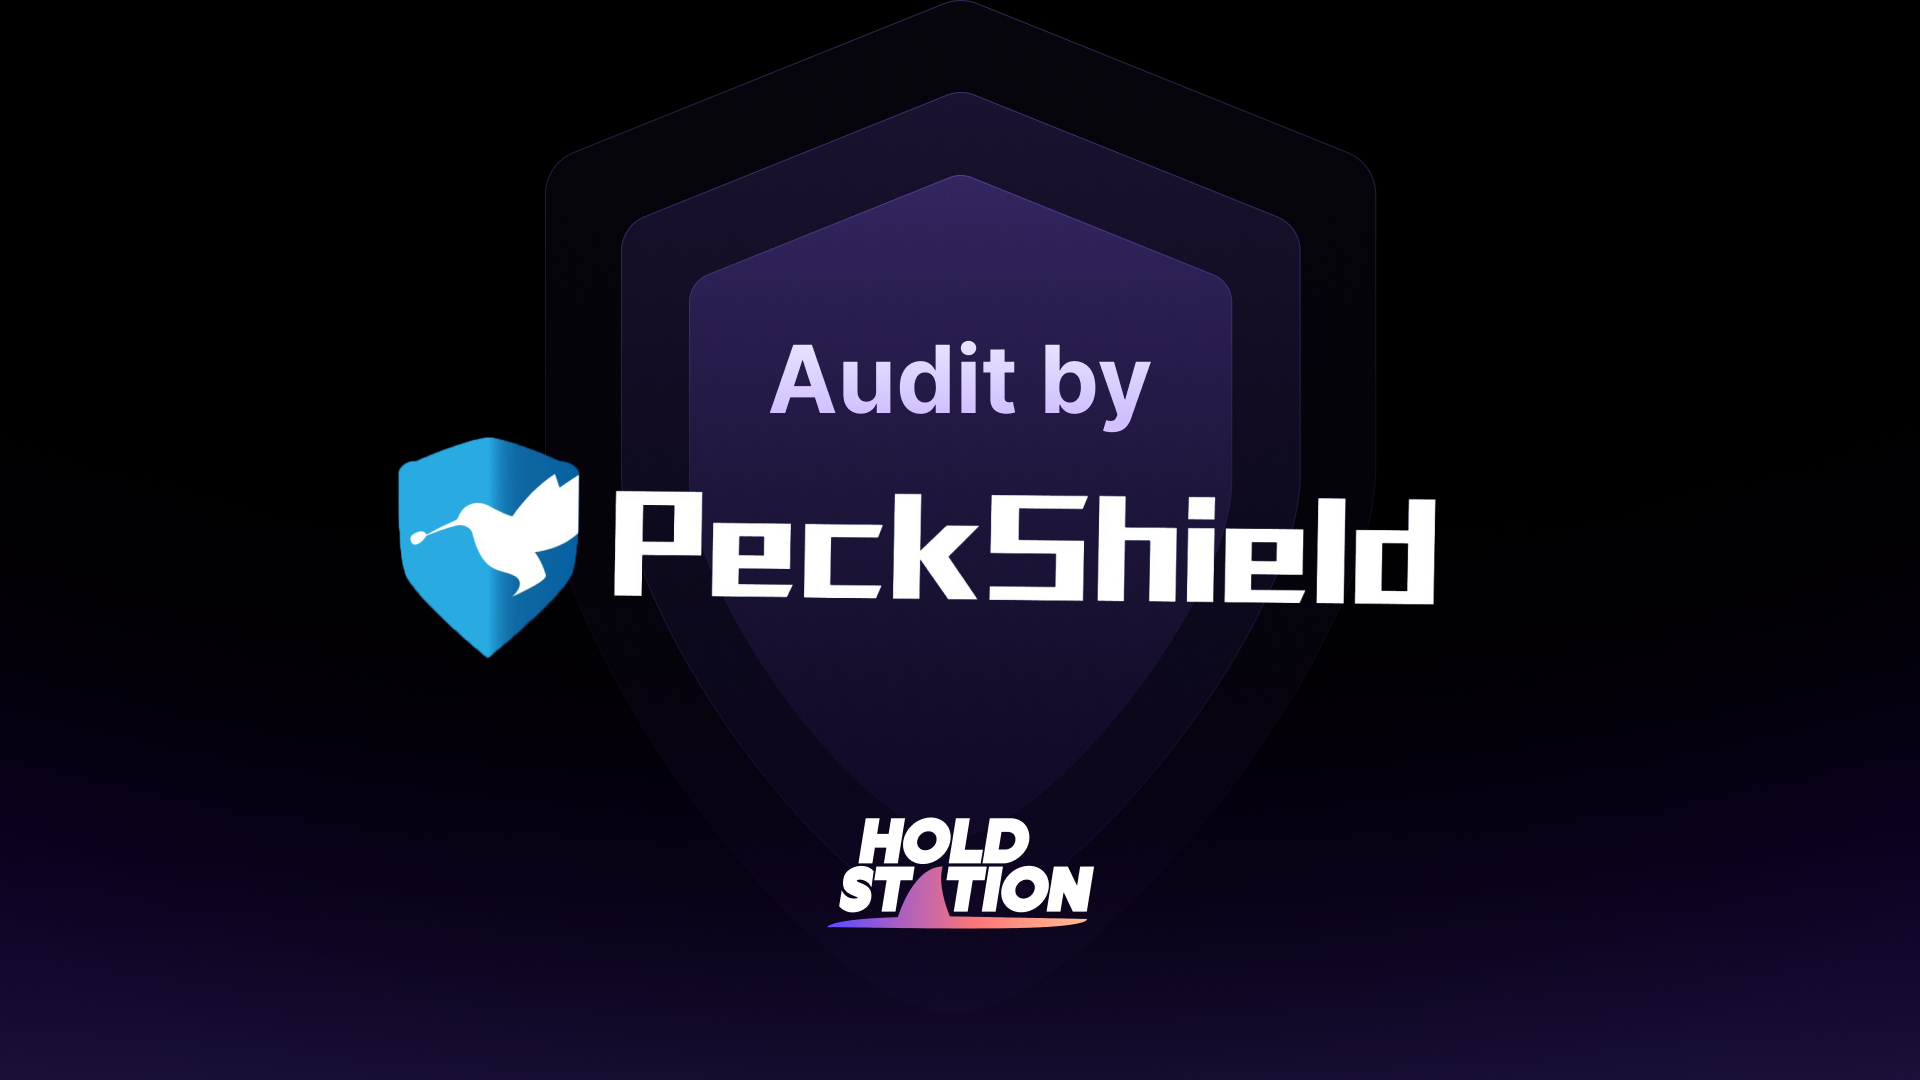 Holdstation Secures Security Audit With Peckshield